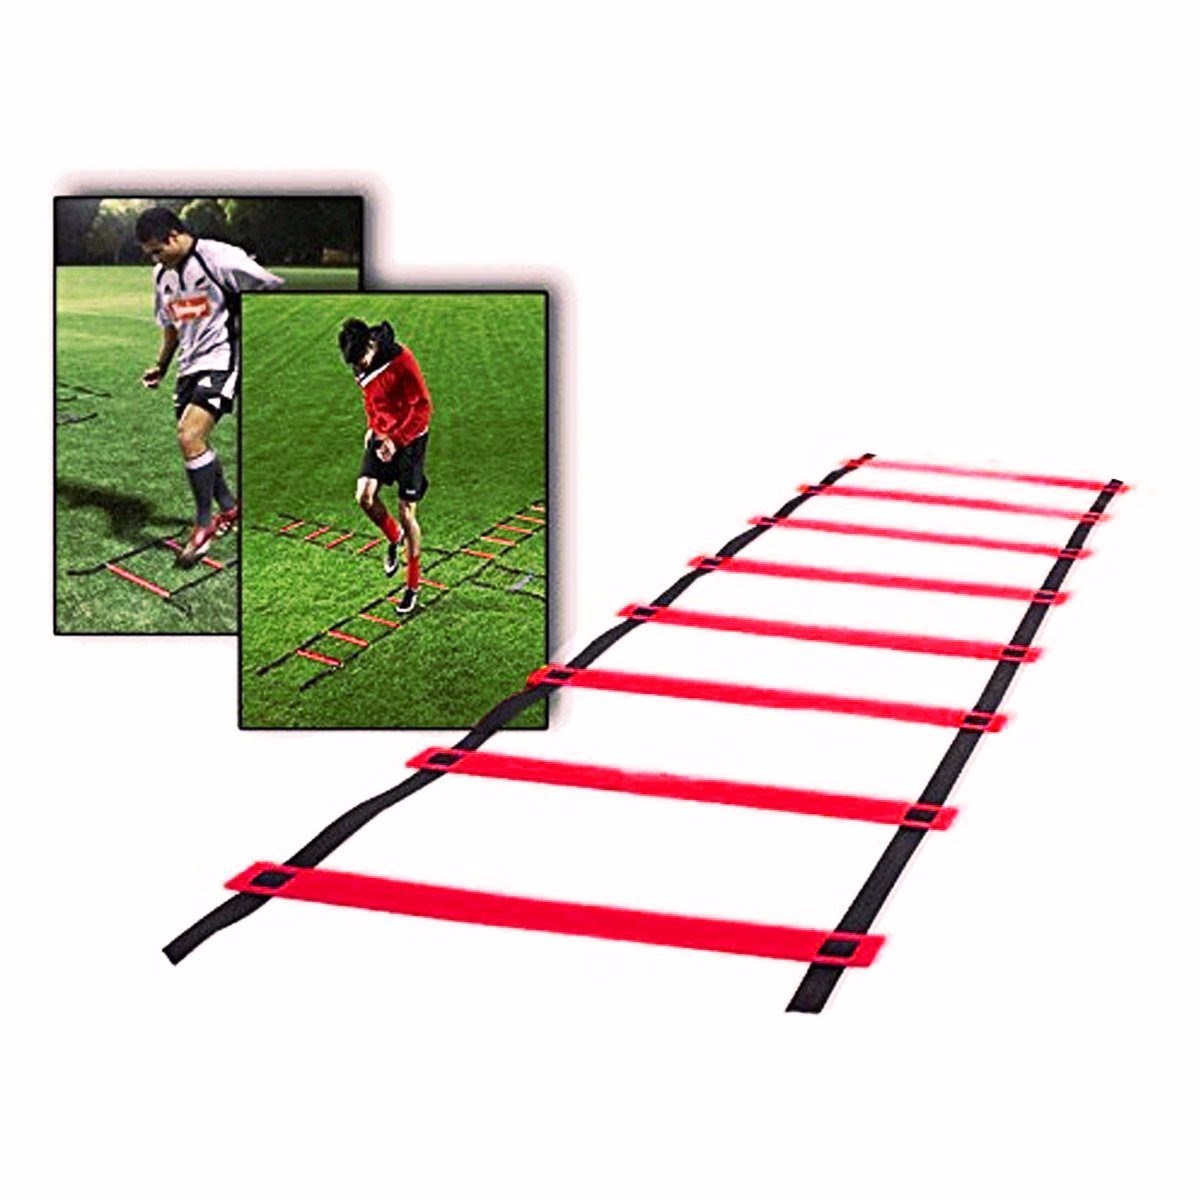 CAMTOA-4m-8-Rung-Training-Ladder-Soccer-Basketball-Speed-Training-Ladder-Outdoor-Indoor-Sports-Train-1886067-15